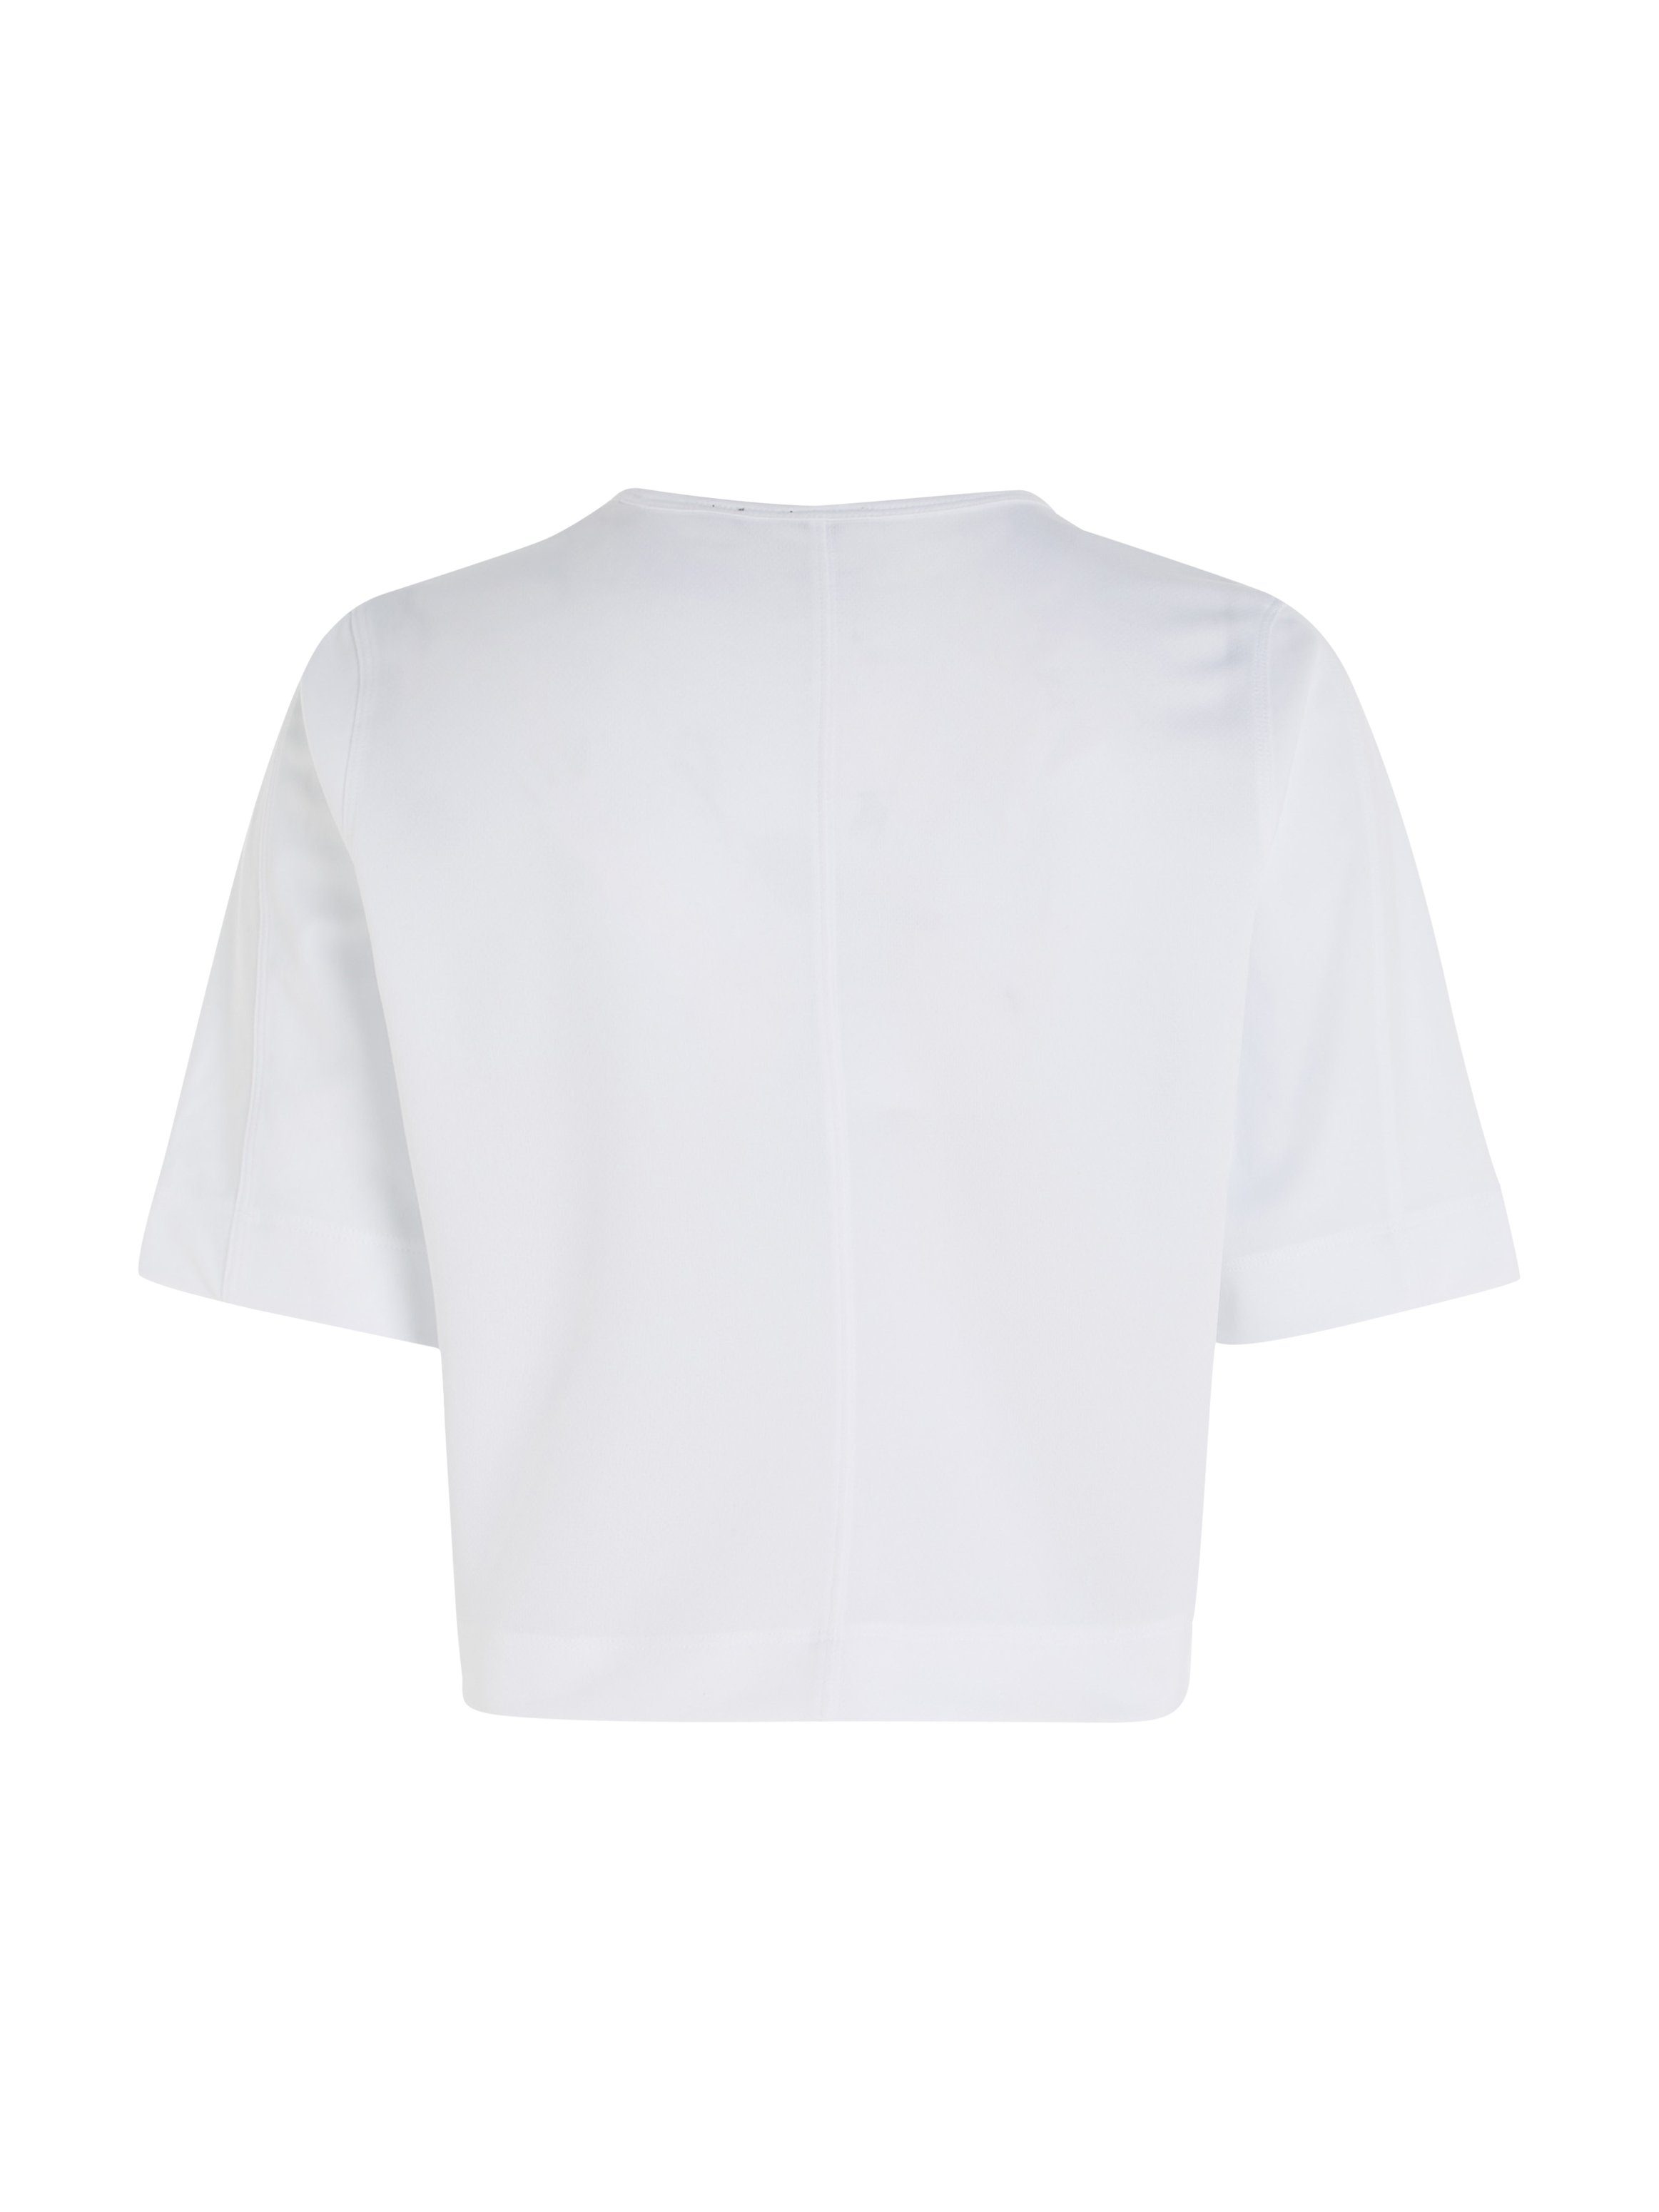 Bright Calvin Klein T-Shirt Sport White